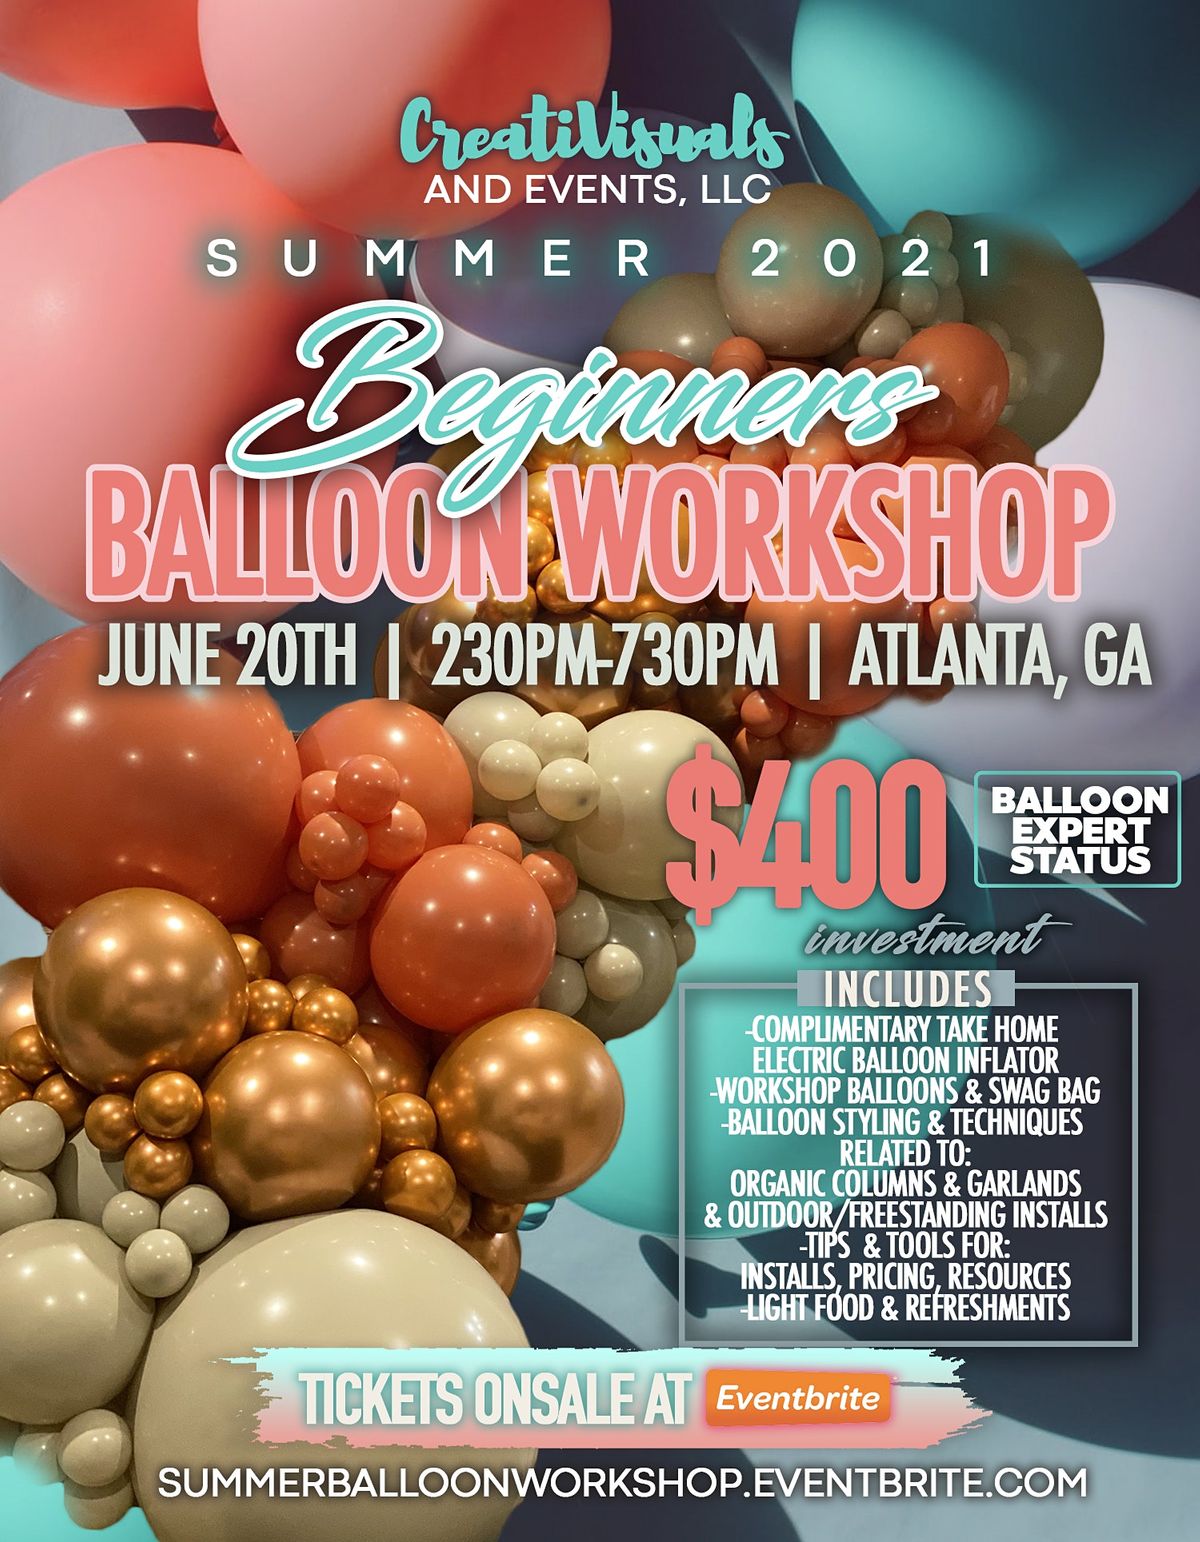 CreatiVisuals Beginners Balloon Workshop Summer 2021